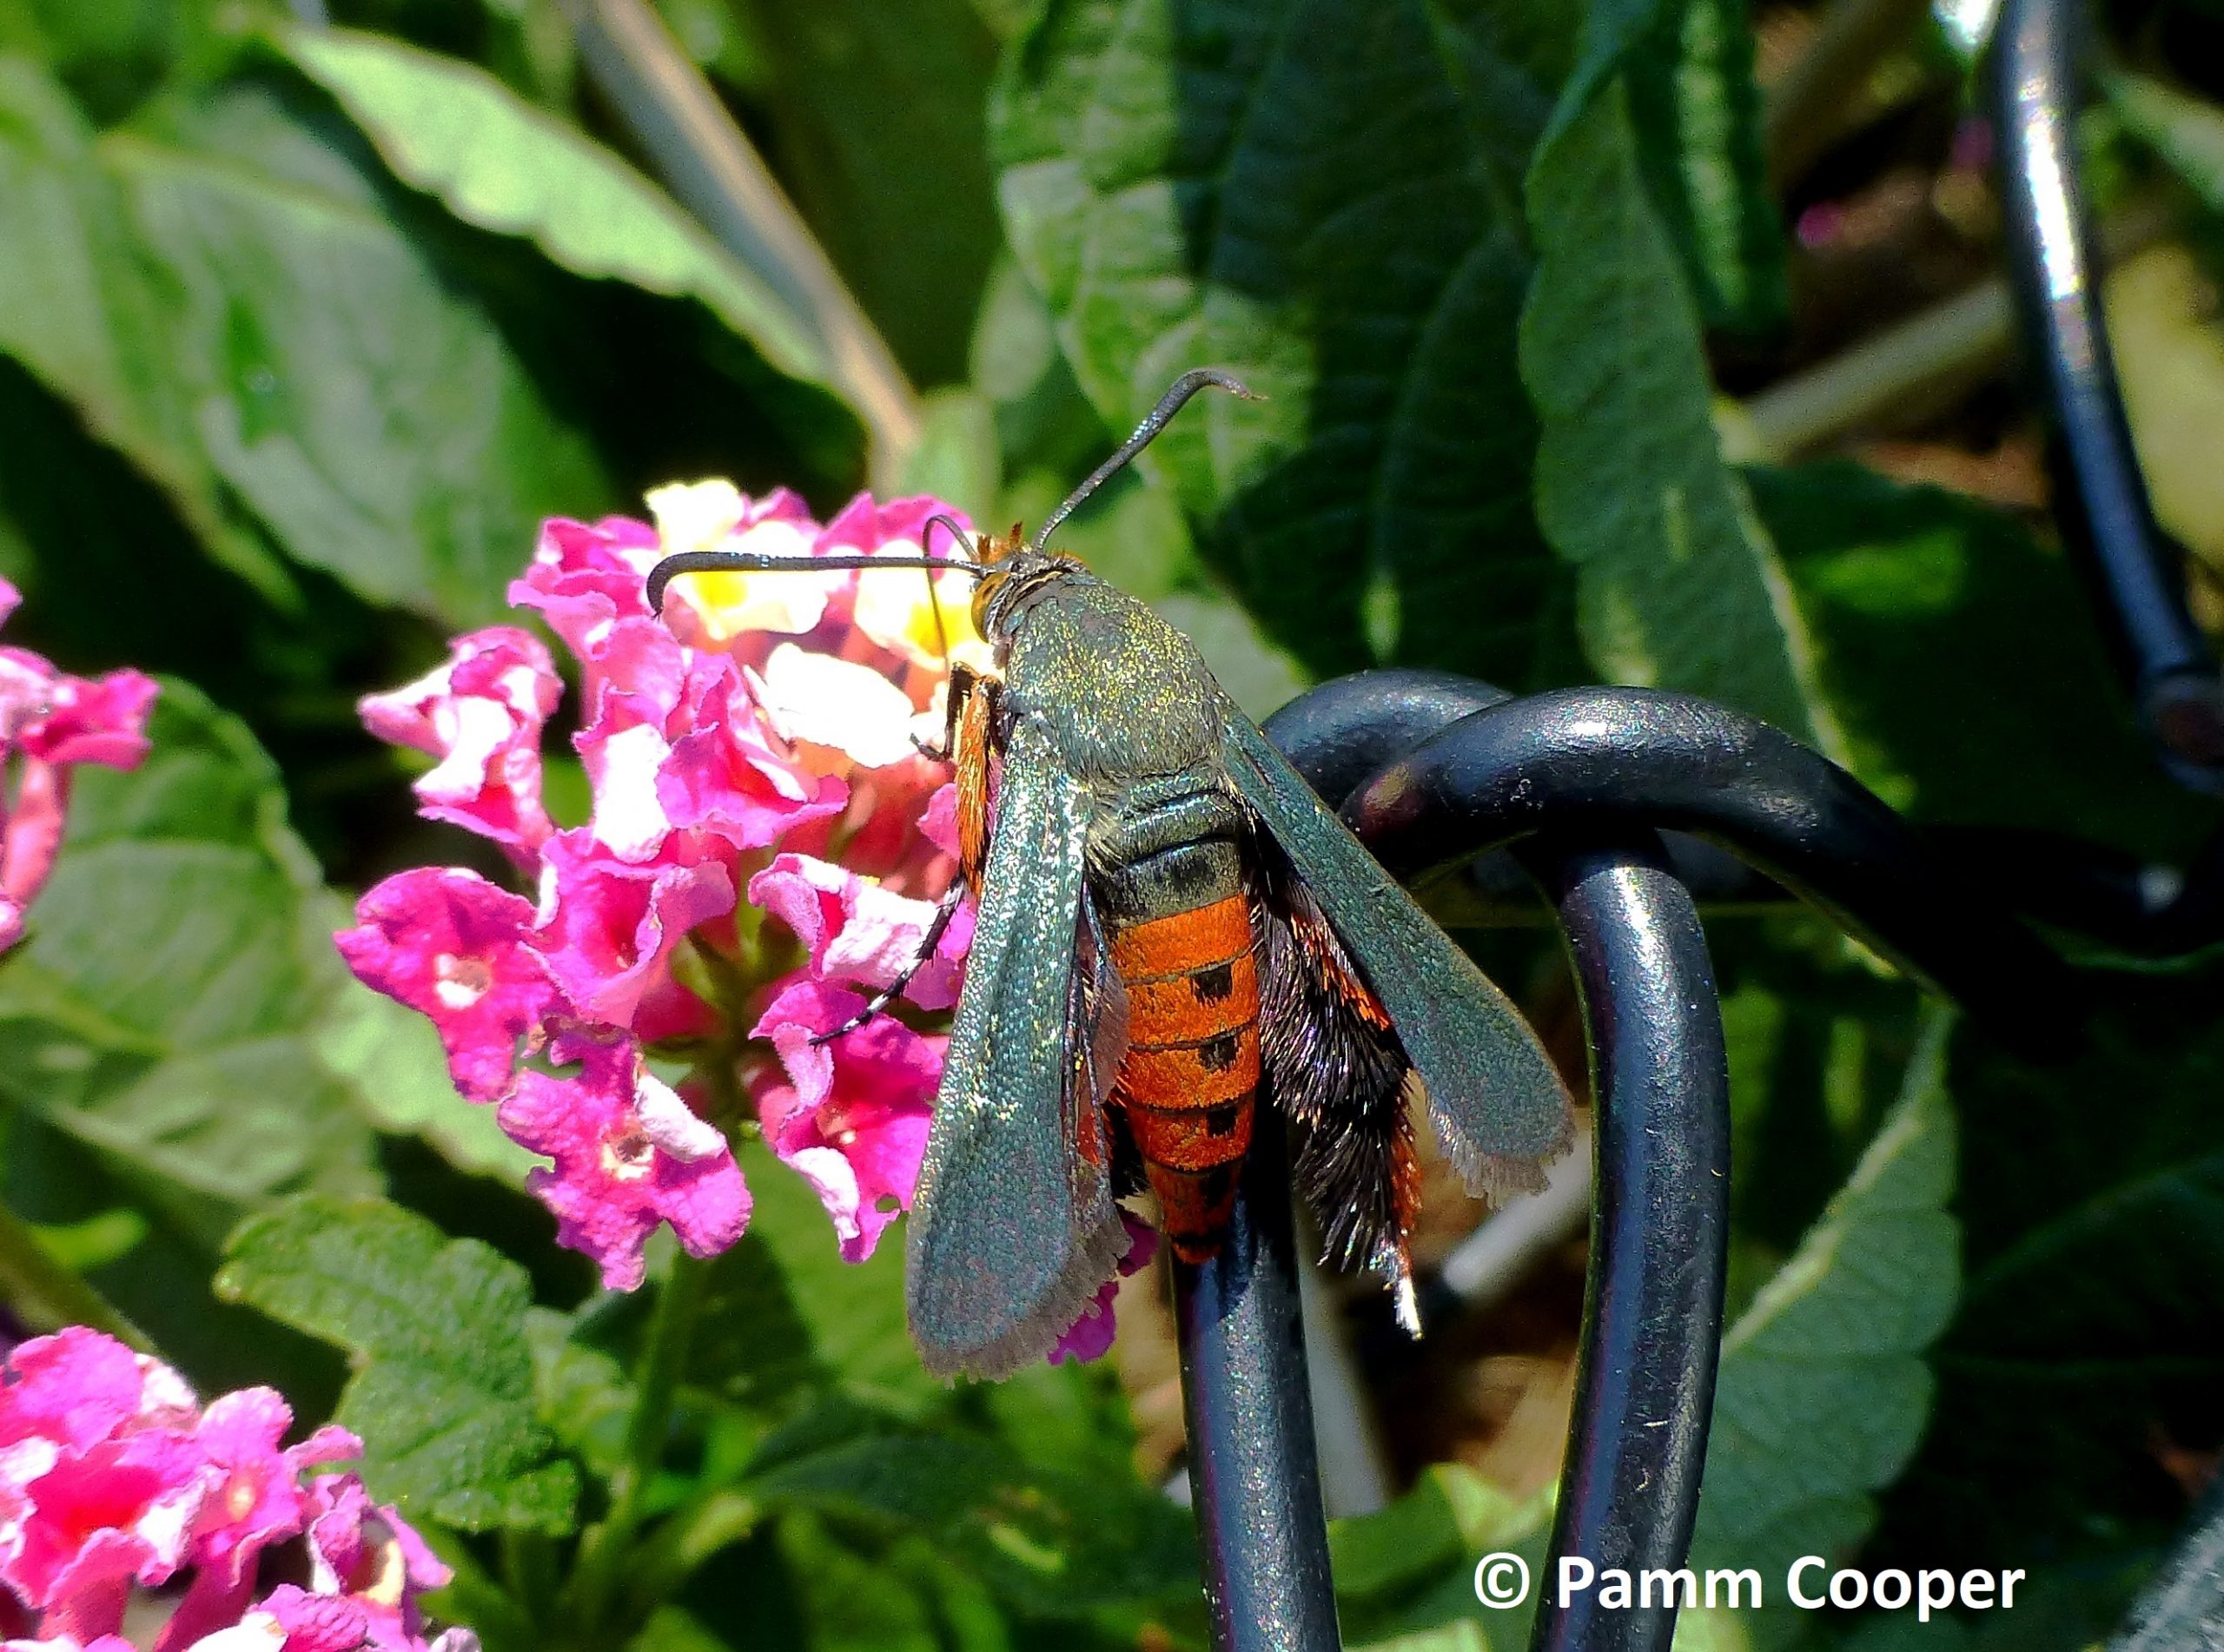 Squash vine borer moth on Lantana